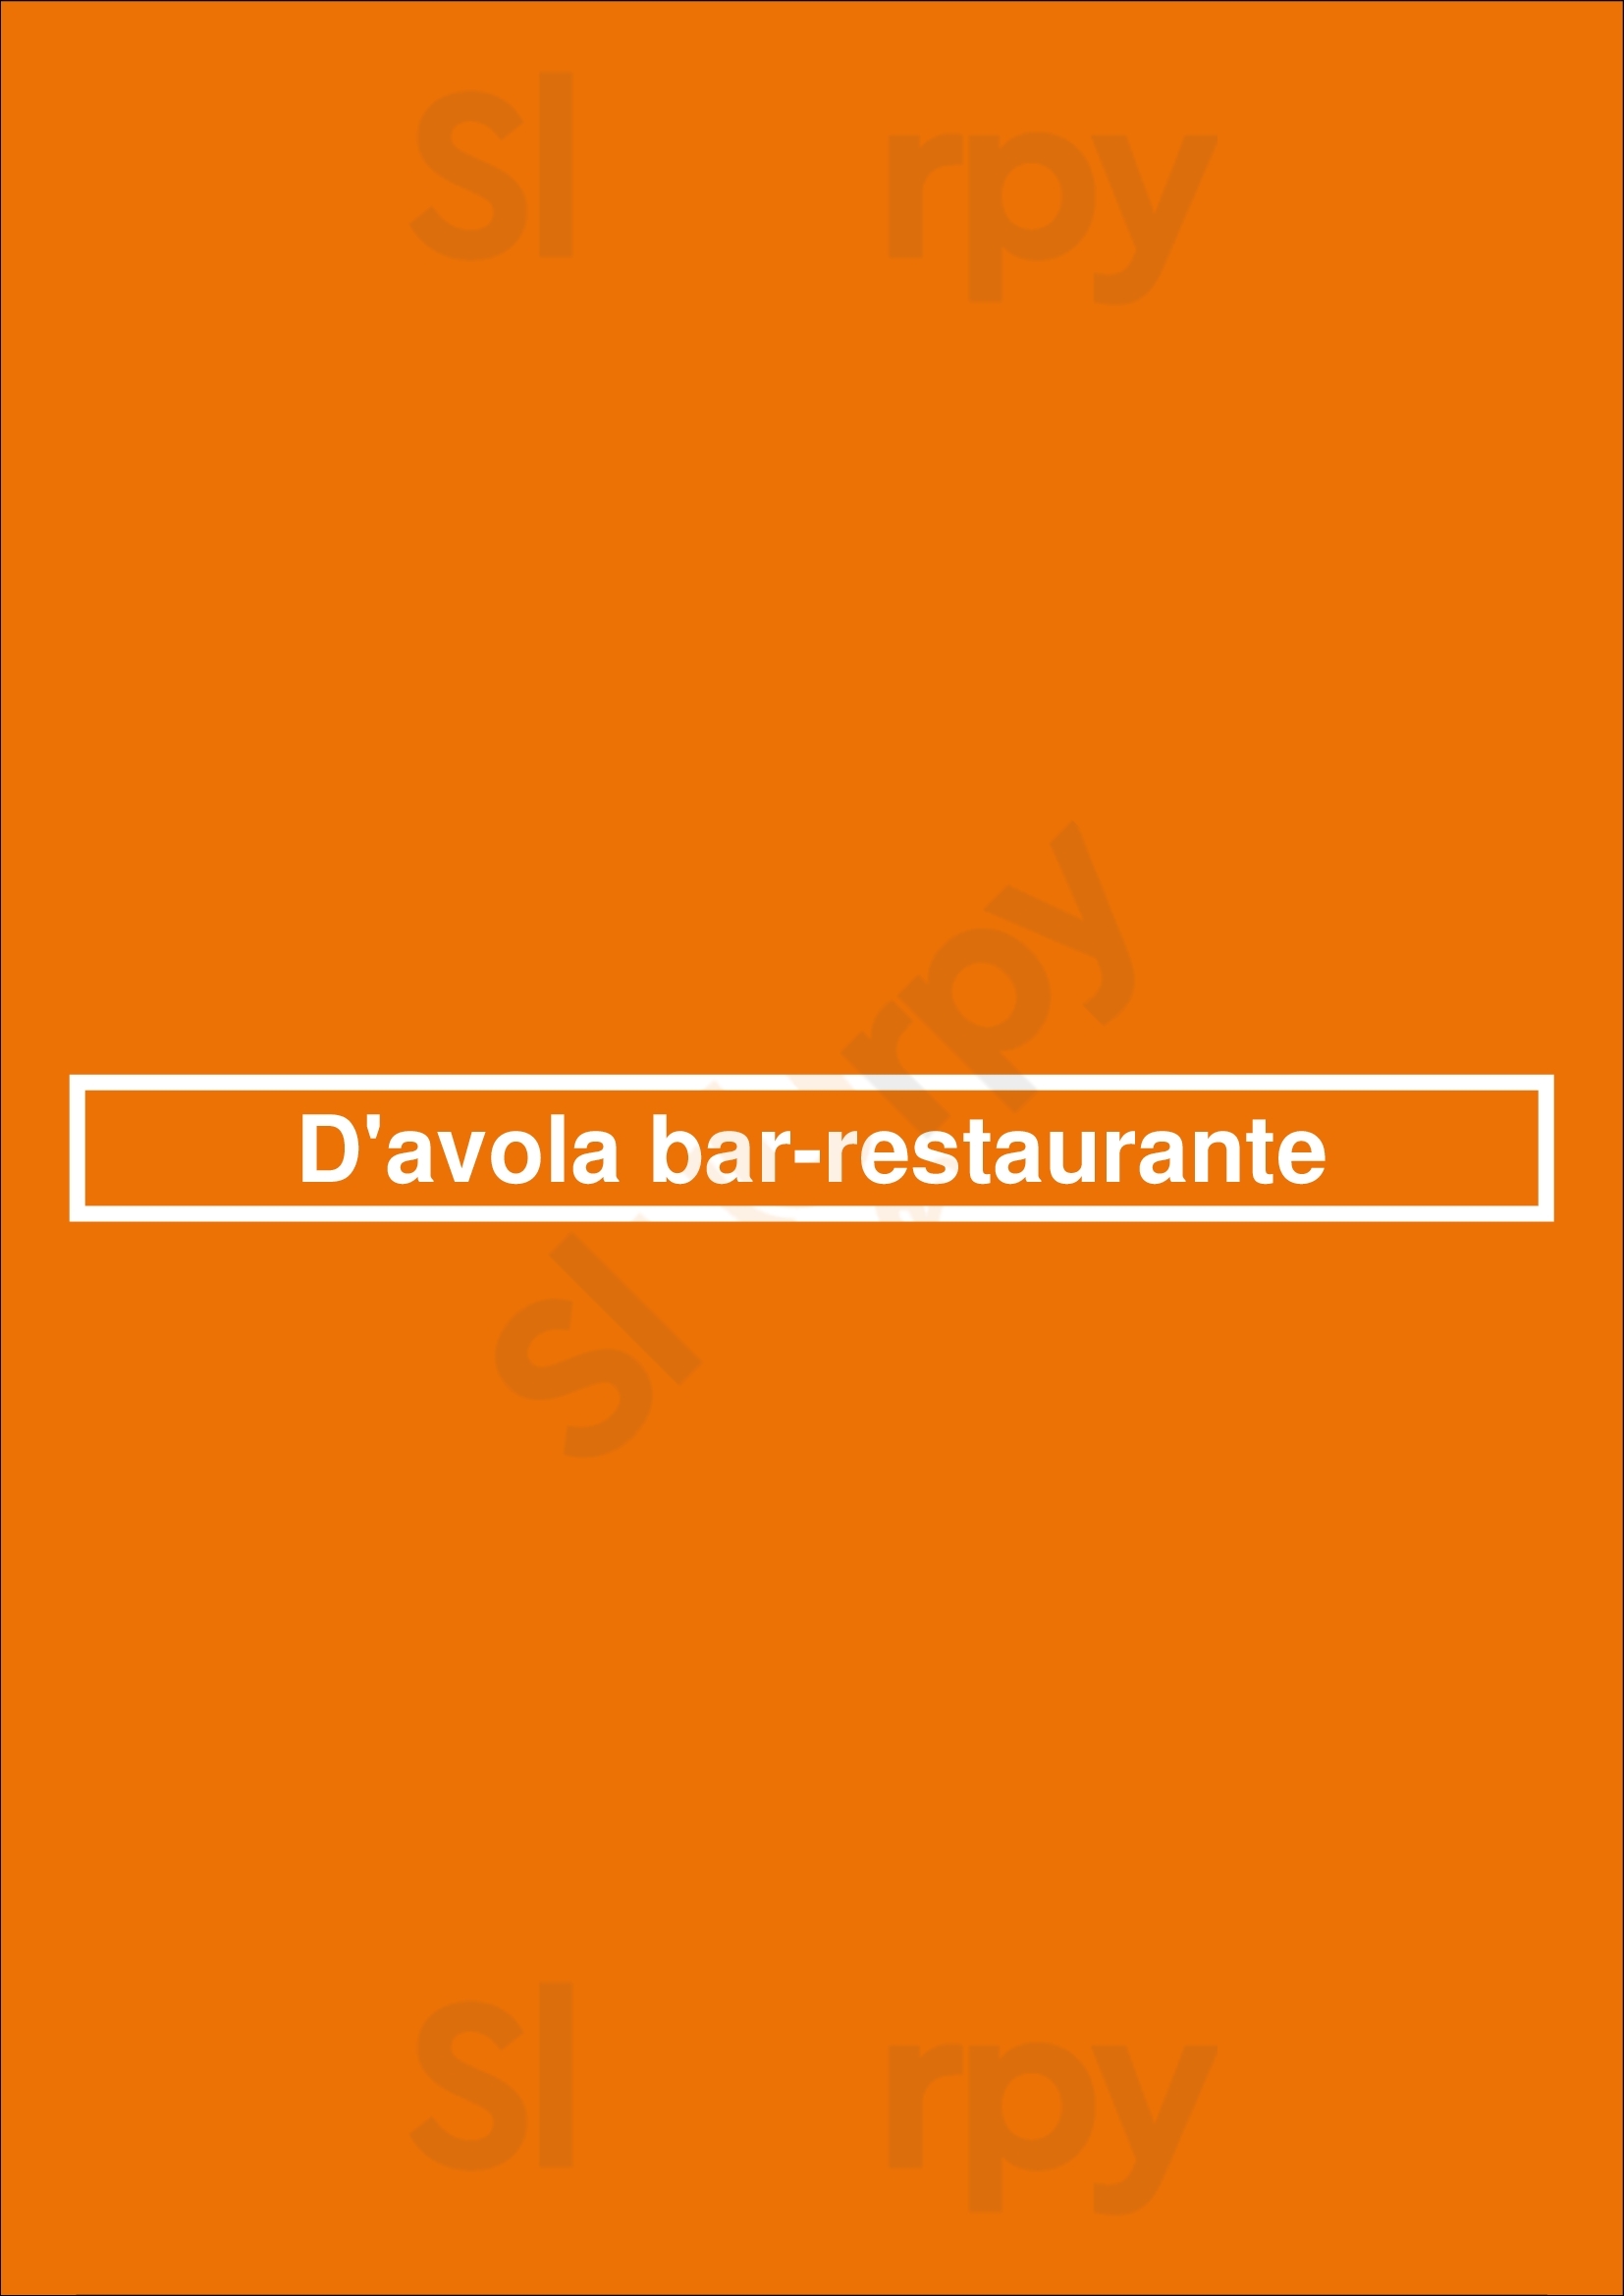 D'avola Bar-restaurante Las Palmas de Gran Canaria Menu - 1